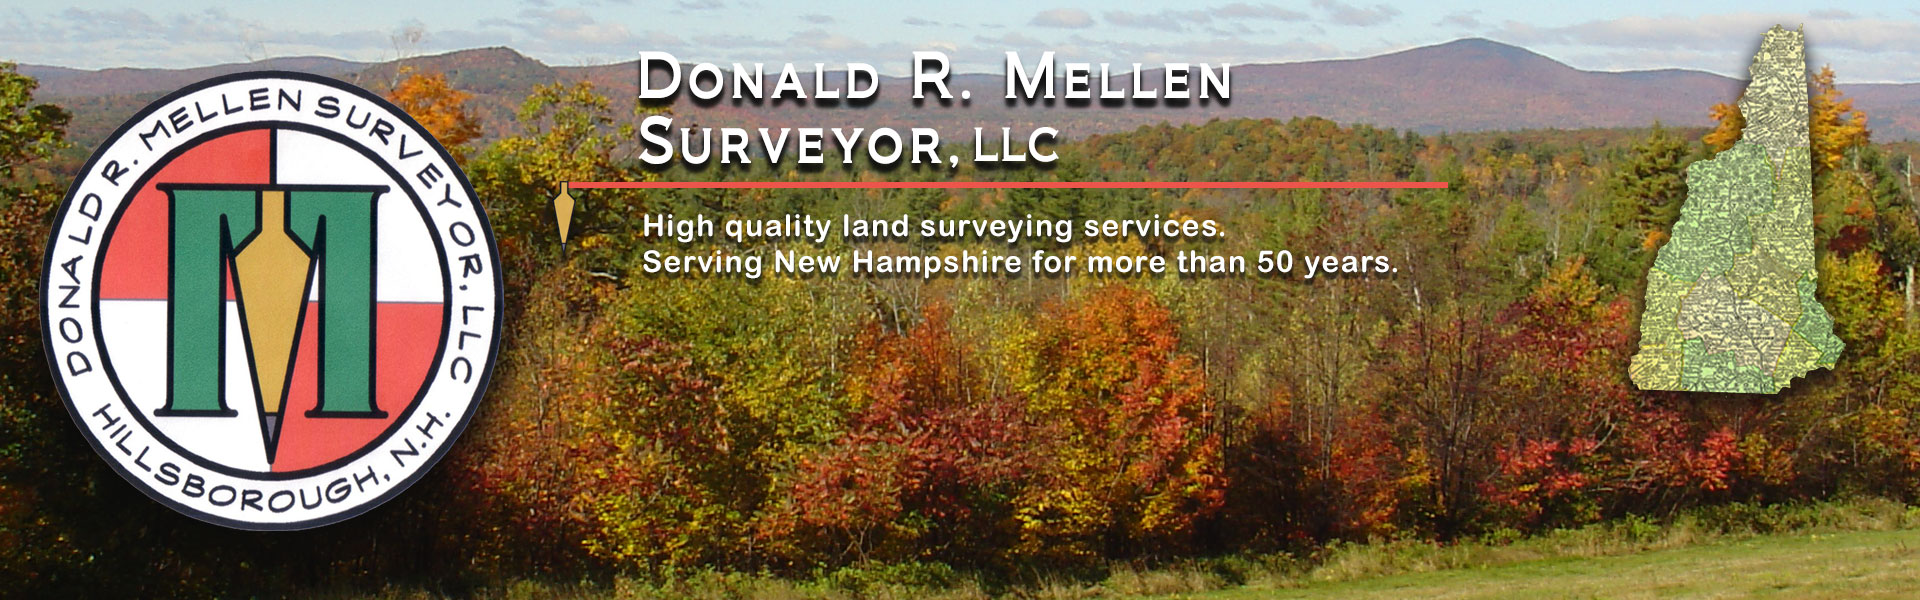 Donald R. Mellen Surveyor, LLC of Hillsborough, New Hampshire.